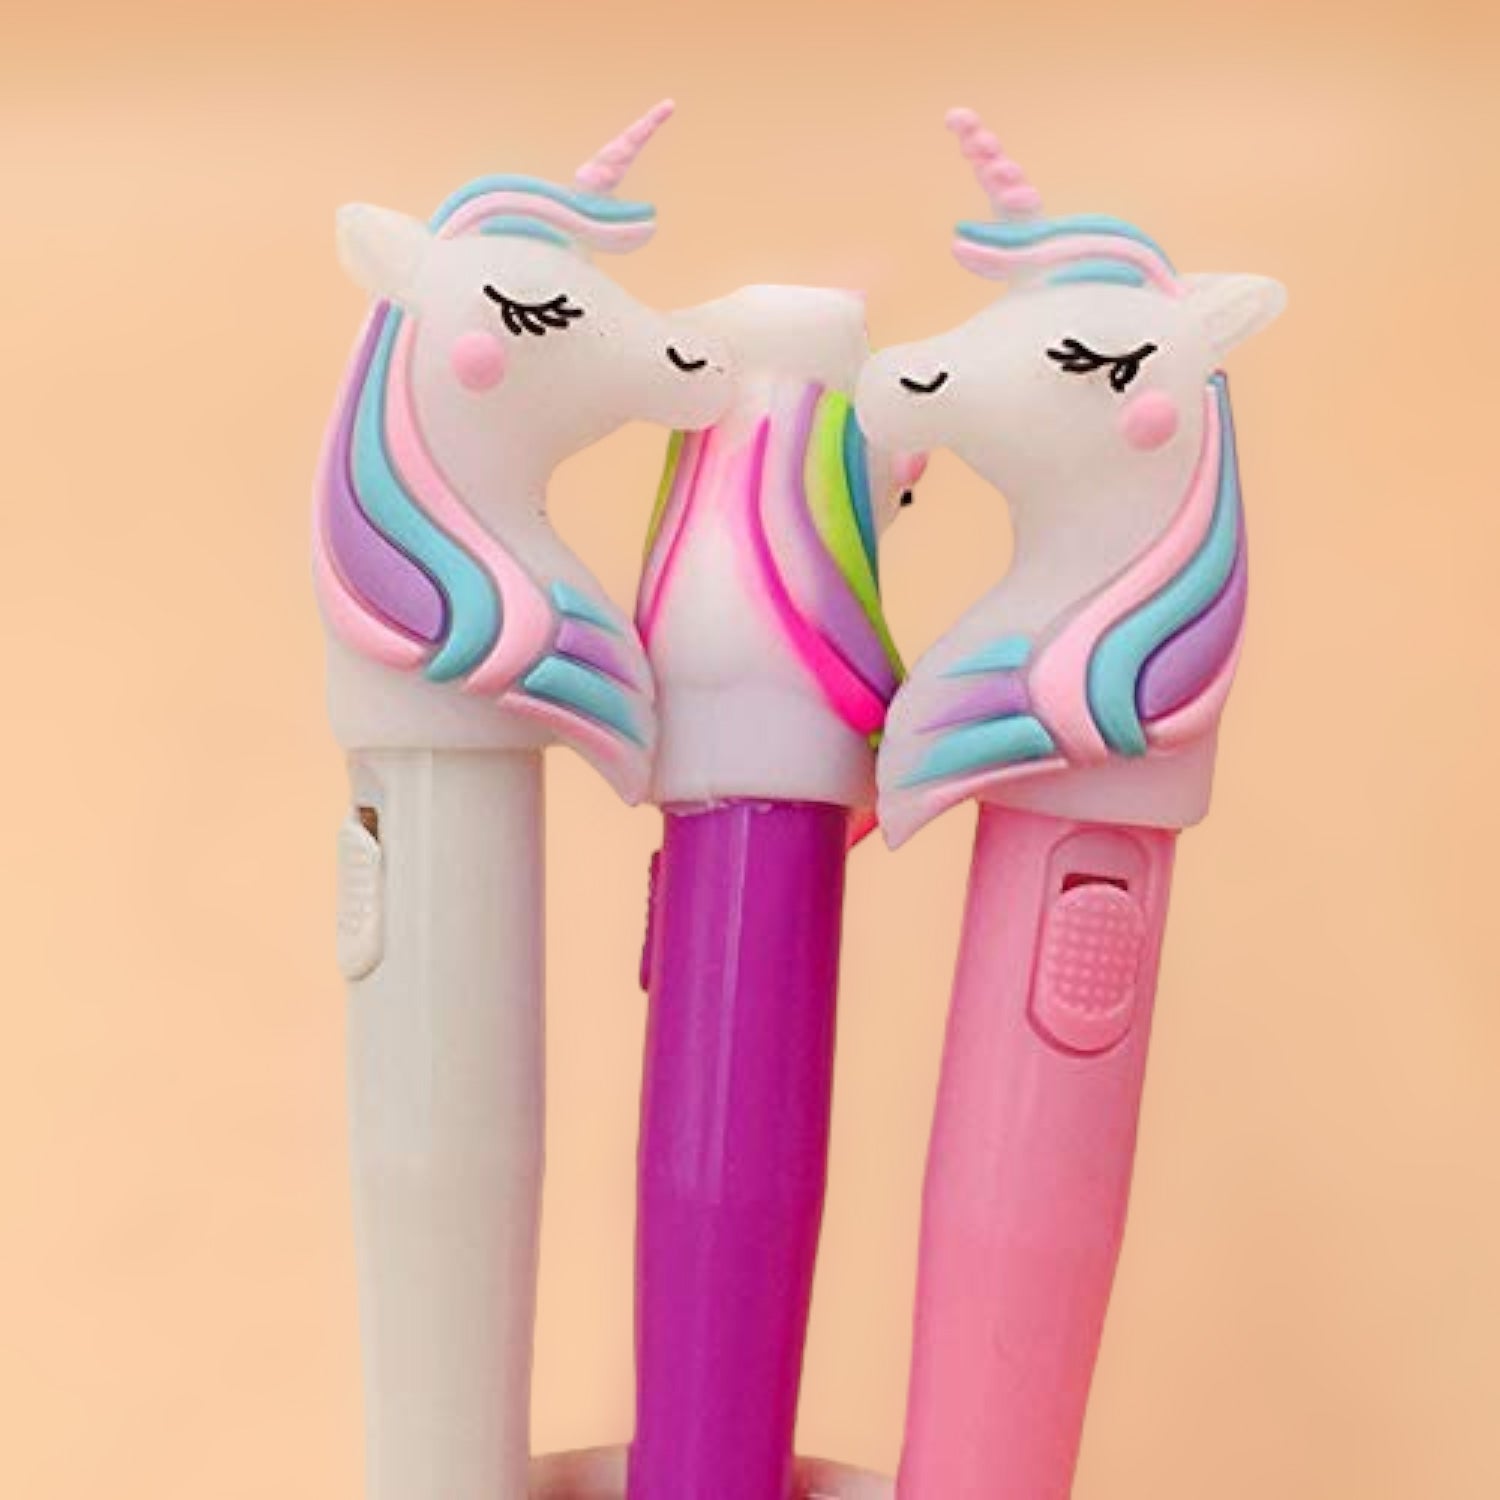 Glitter Gel Pen | Fancy Pen - Unicorn & Peppa Pig Design - for Kids, Girls, Boys, Students, School, Birthday Gift & Return Gifts - Apkamart